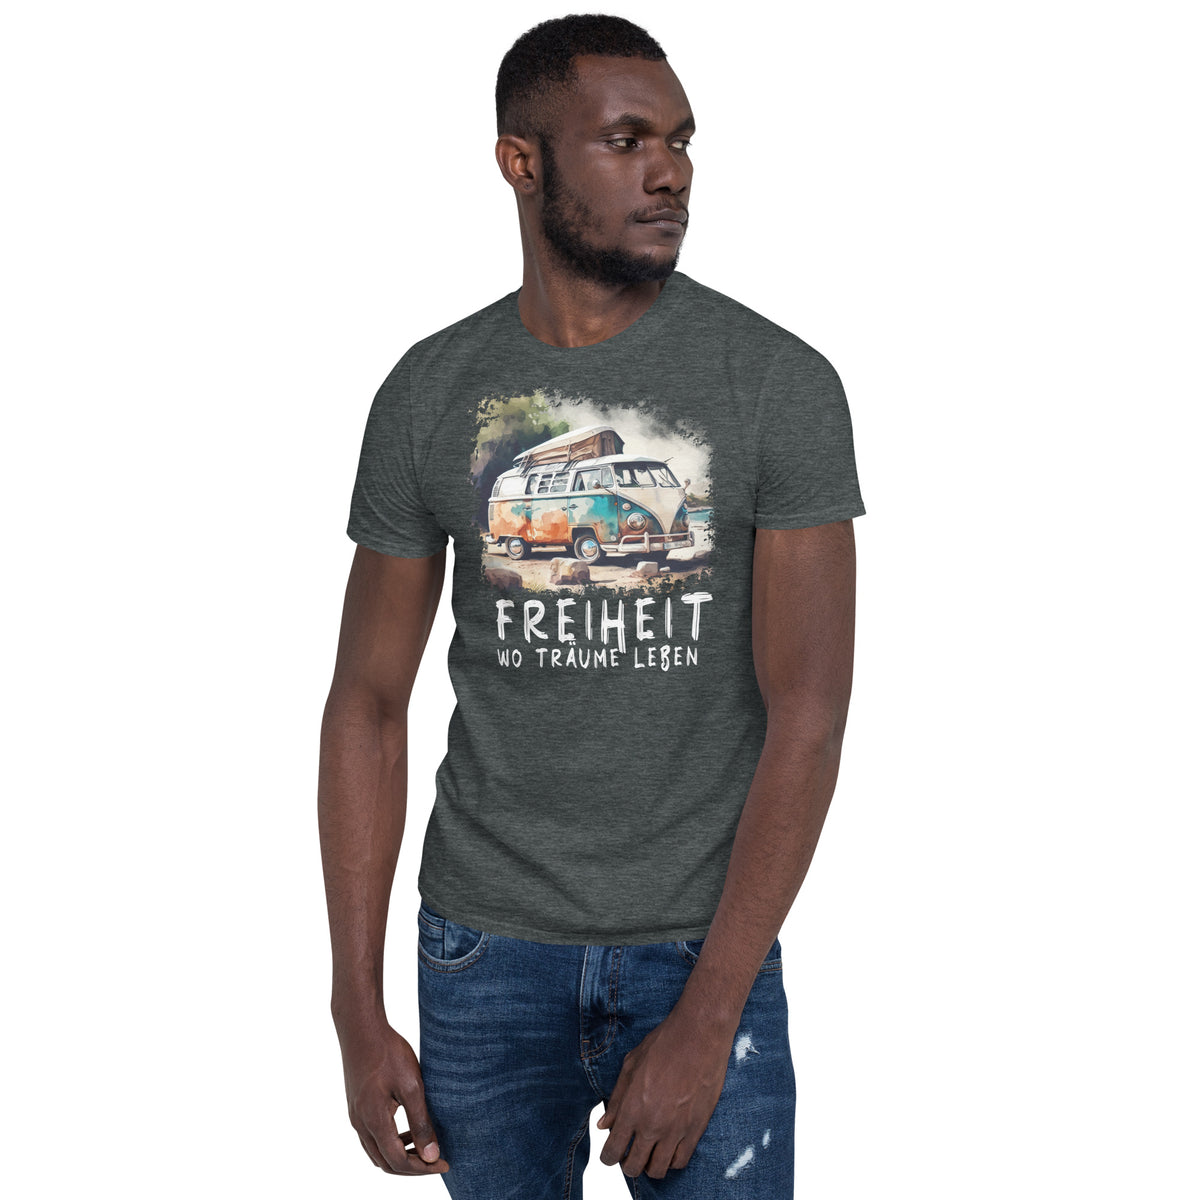 T-Shirt Van-Life Motiv “Freiheit wo Träume leben” Variante 6